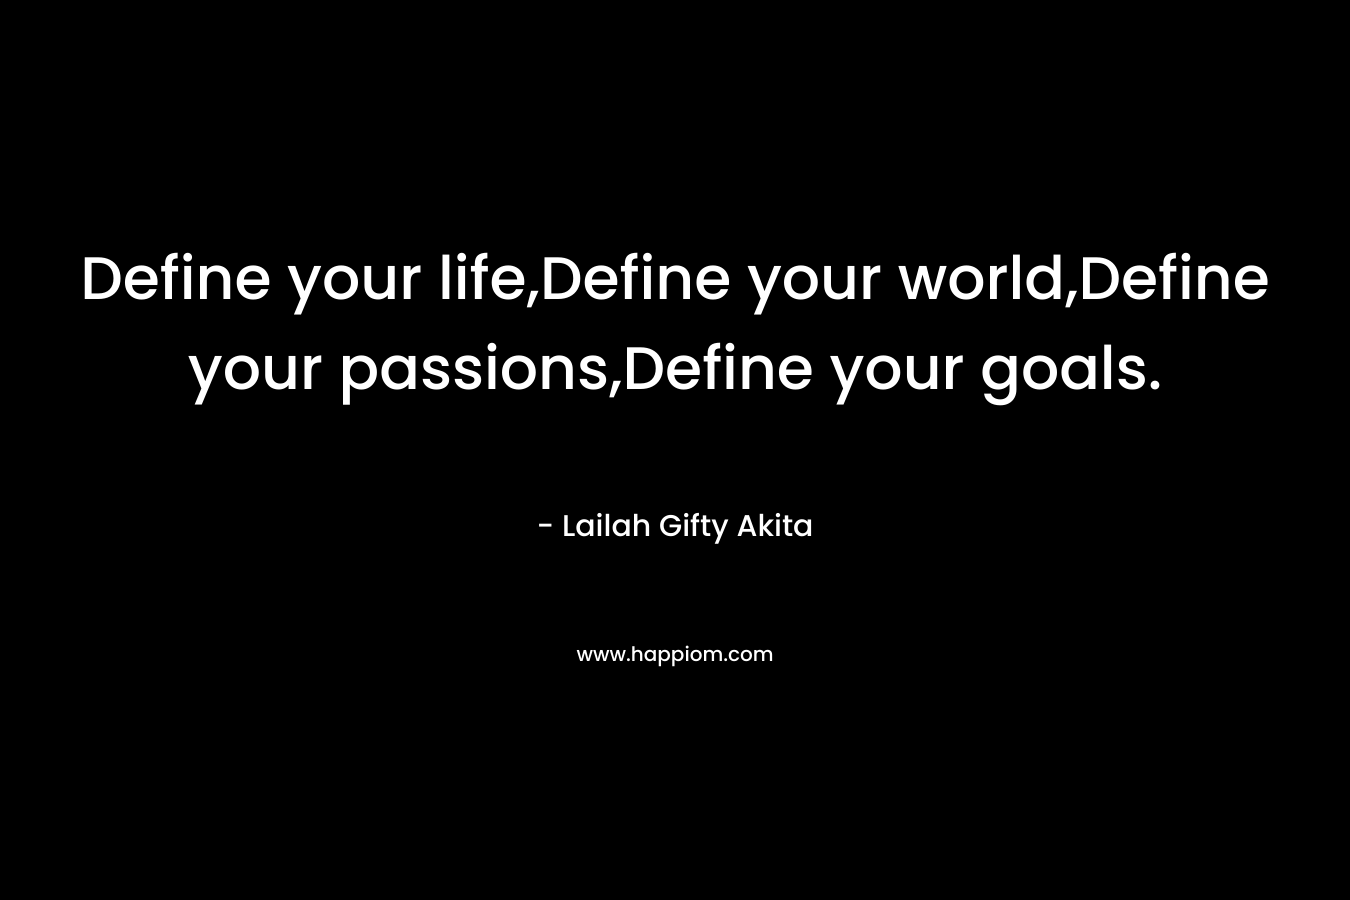 Define your life,Define your world,Define your passions,Define your goals.